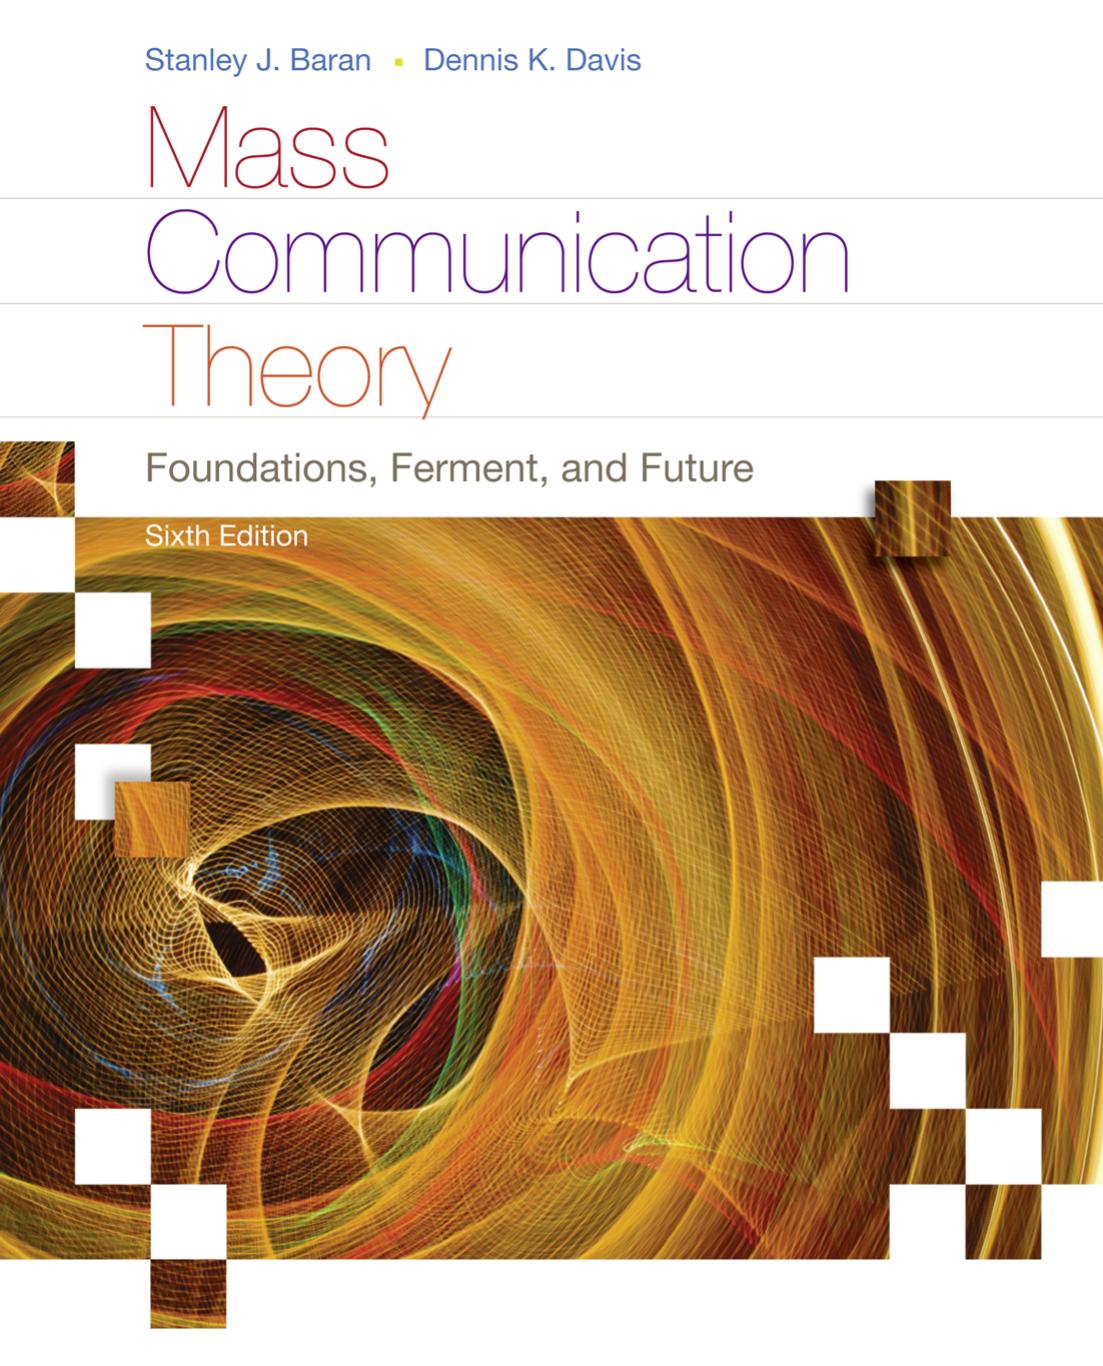 Mass Communication Theory: Foundations, Ferment, and Future, 6th ed.